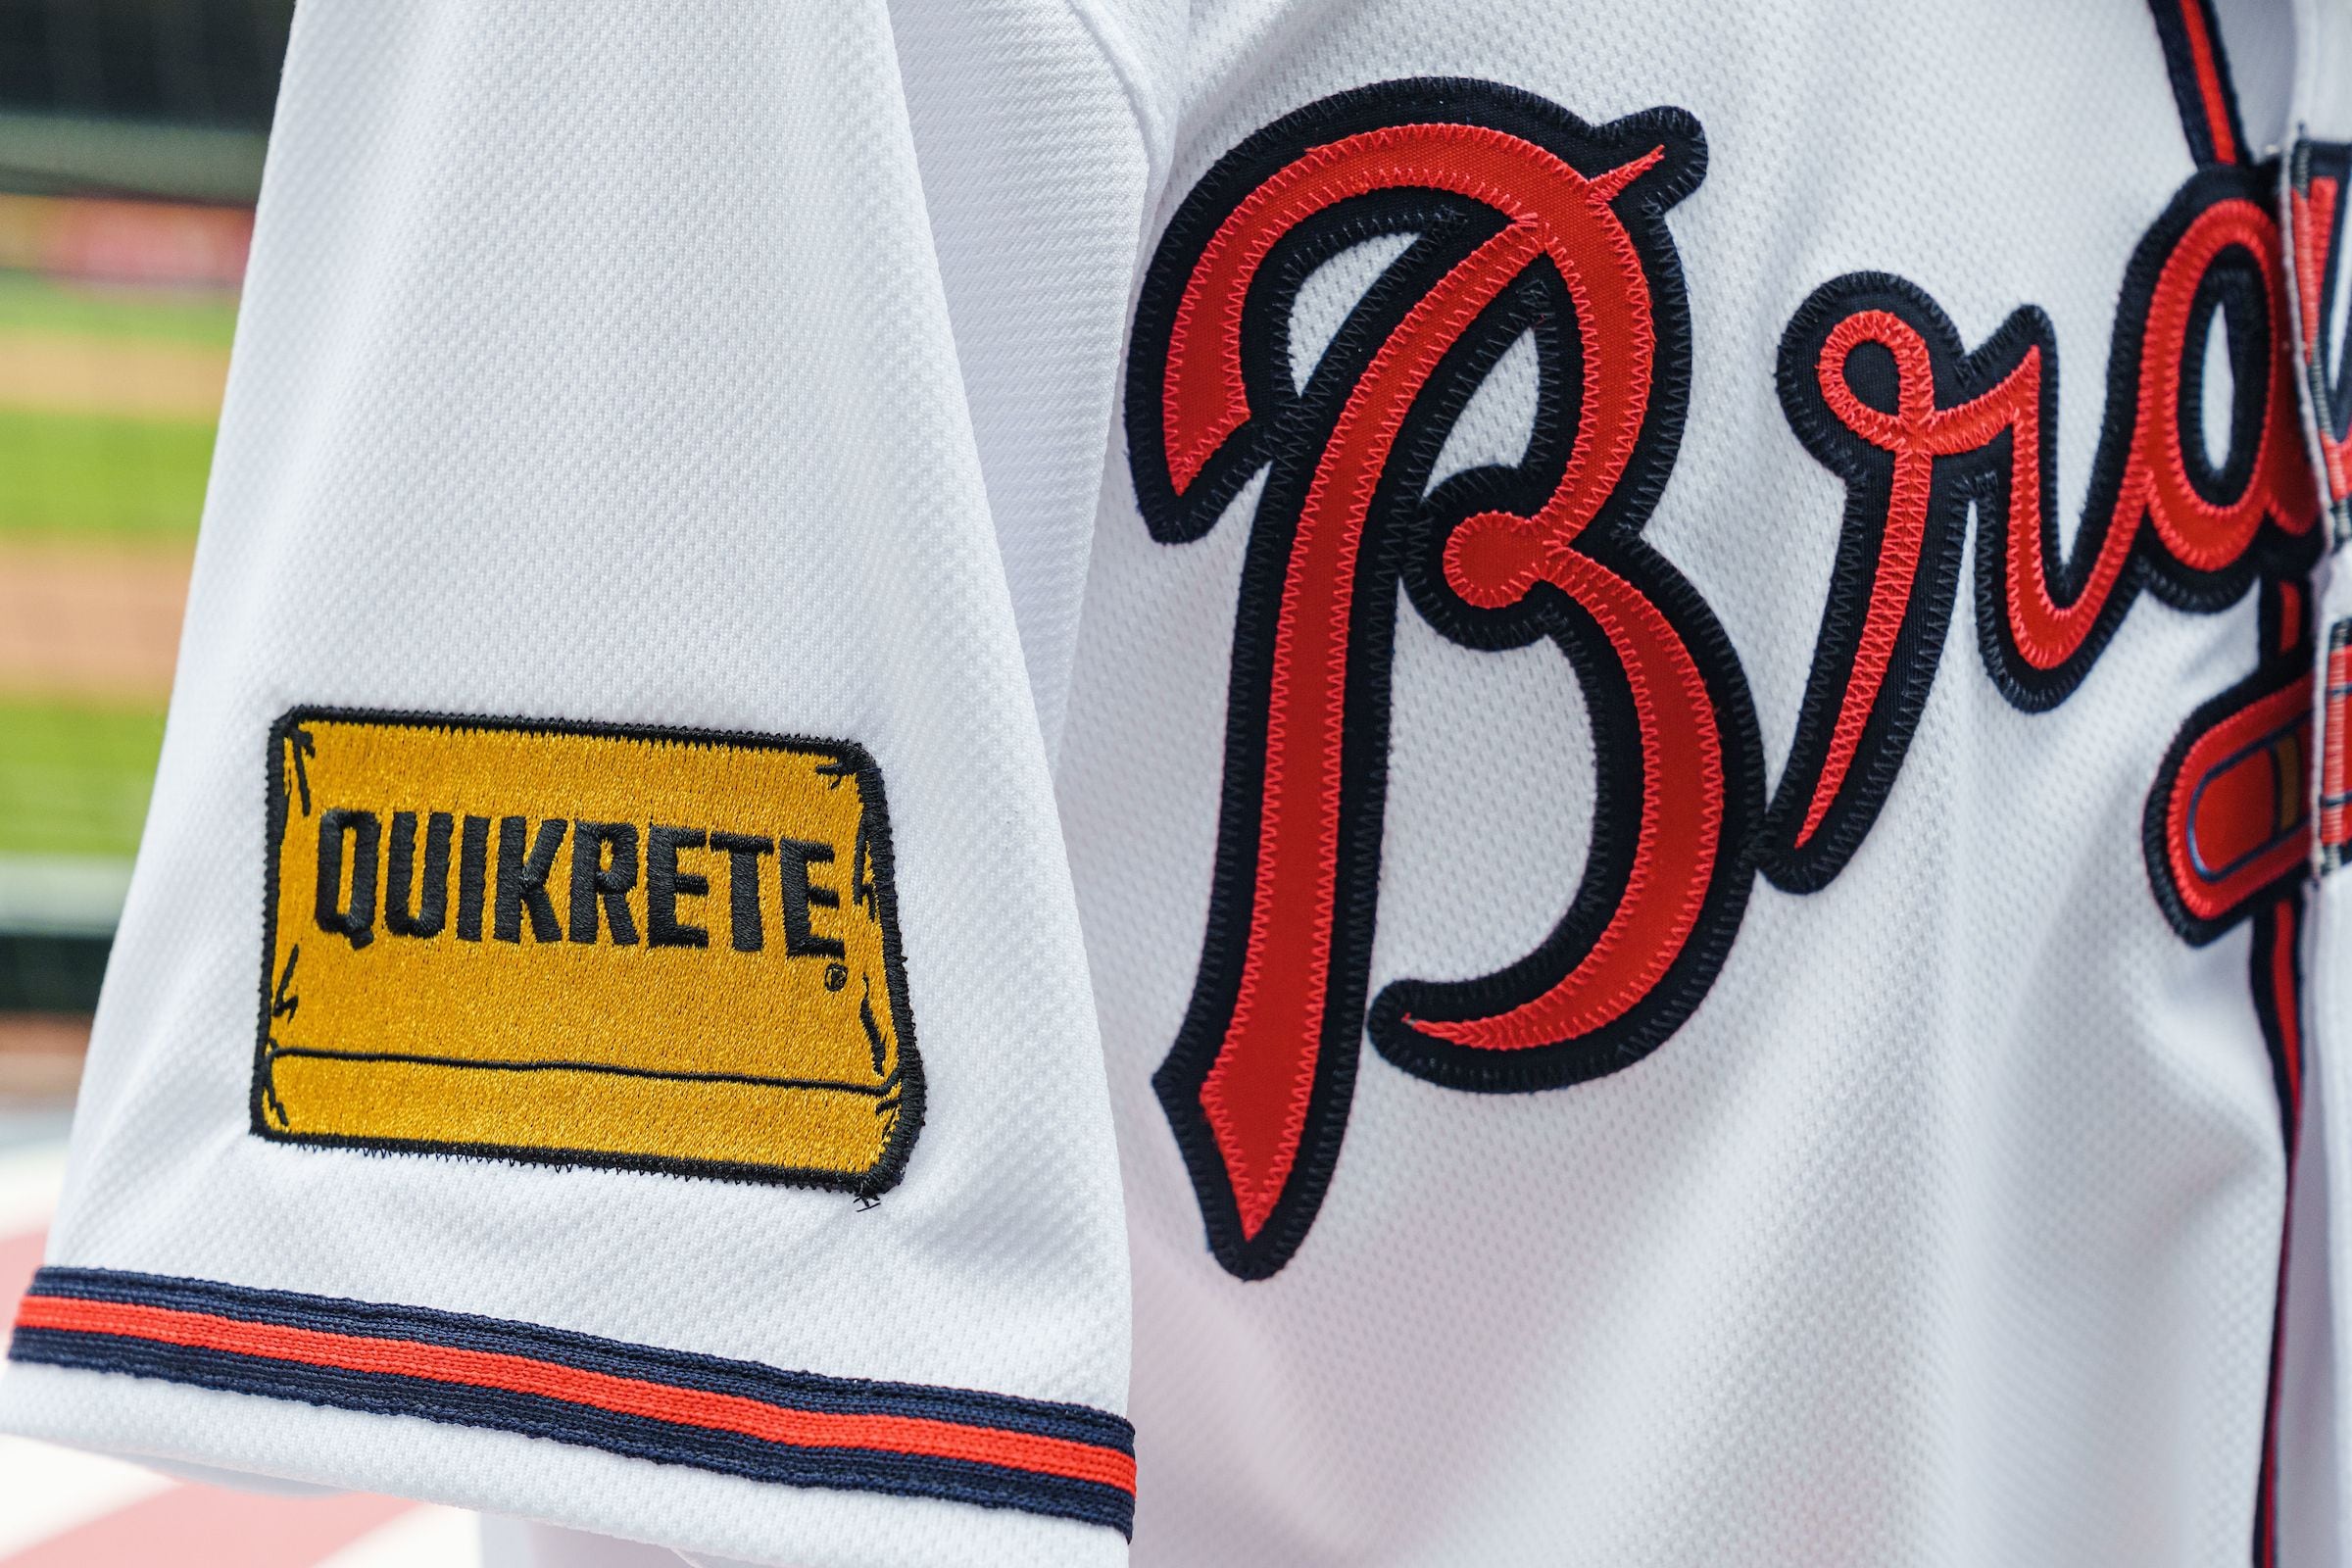 Atlanta Braves Quikrete Patch: Team's gaudy sleeve sponsor